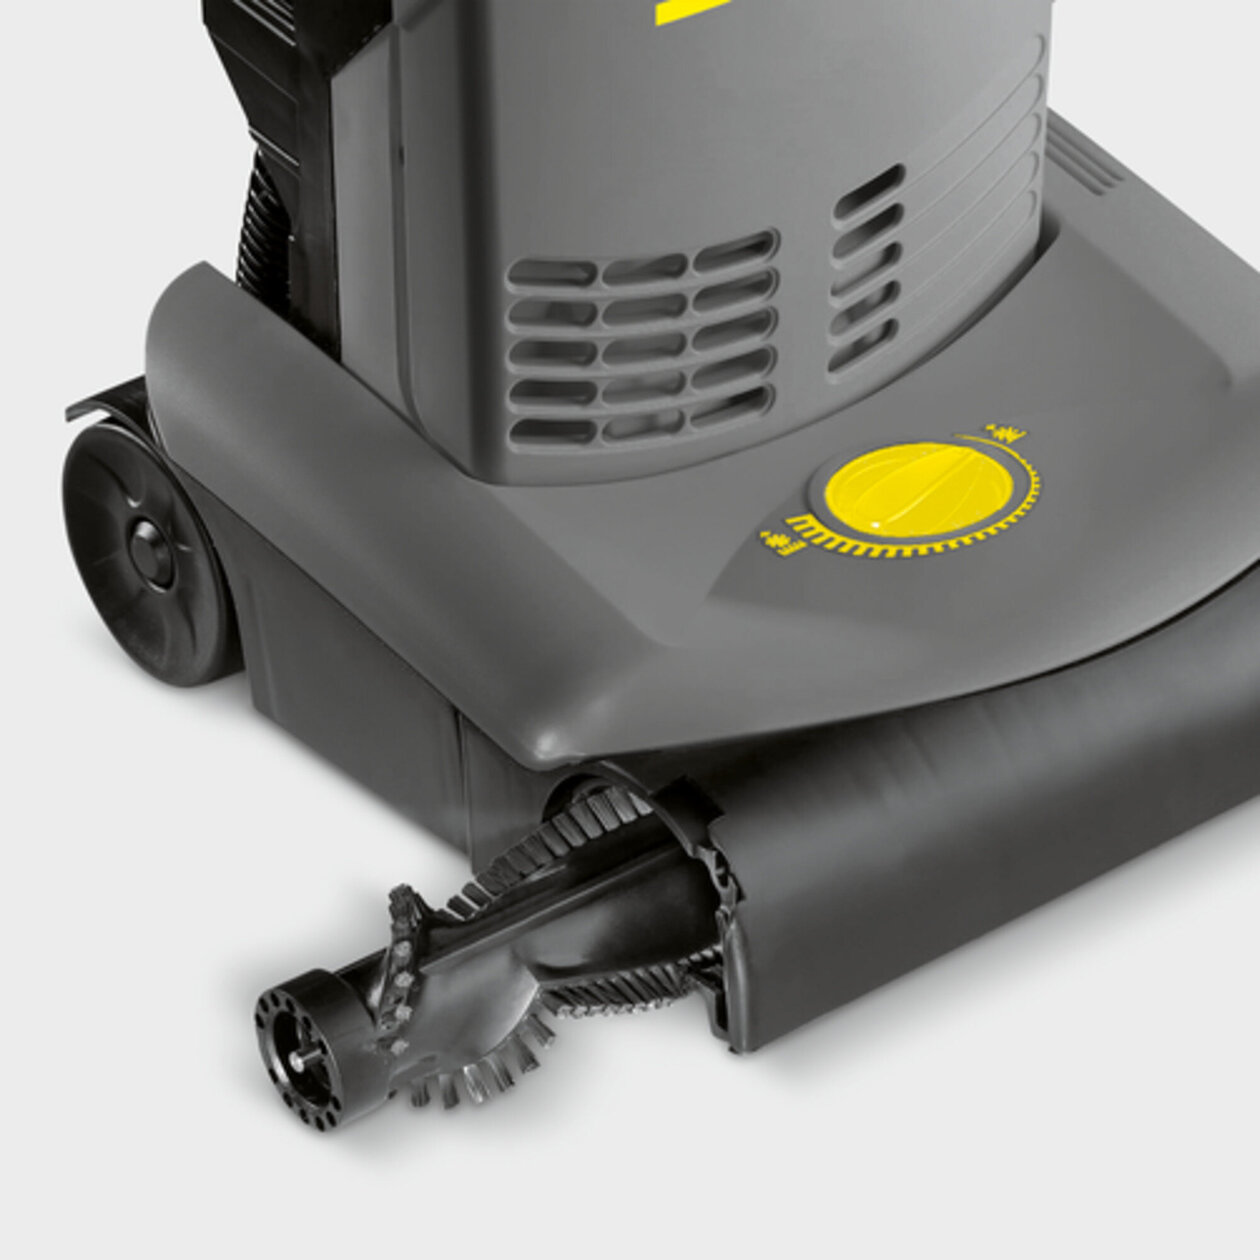 Upright brush-type vacuum cleaner CV 38/1 CUL: Manual roller brush adjustment